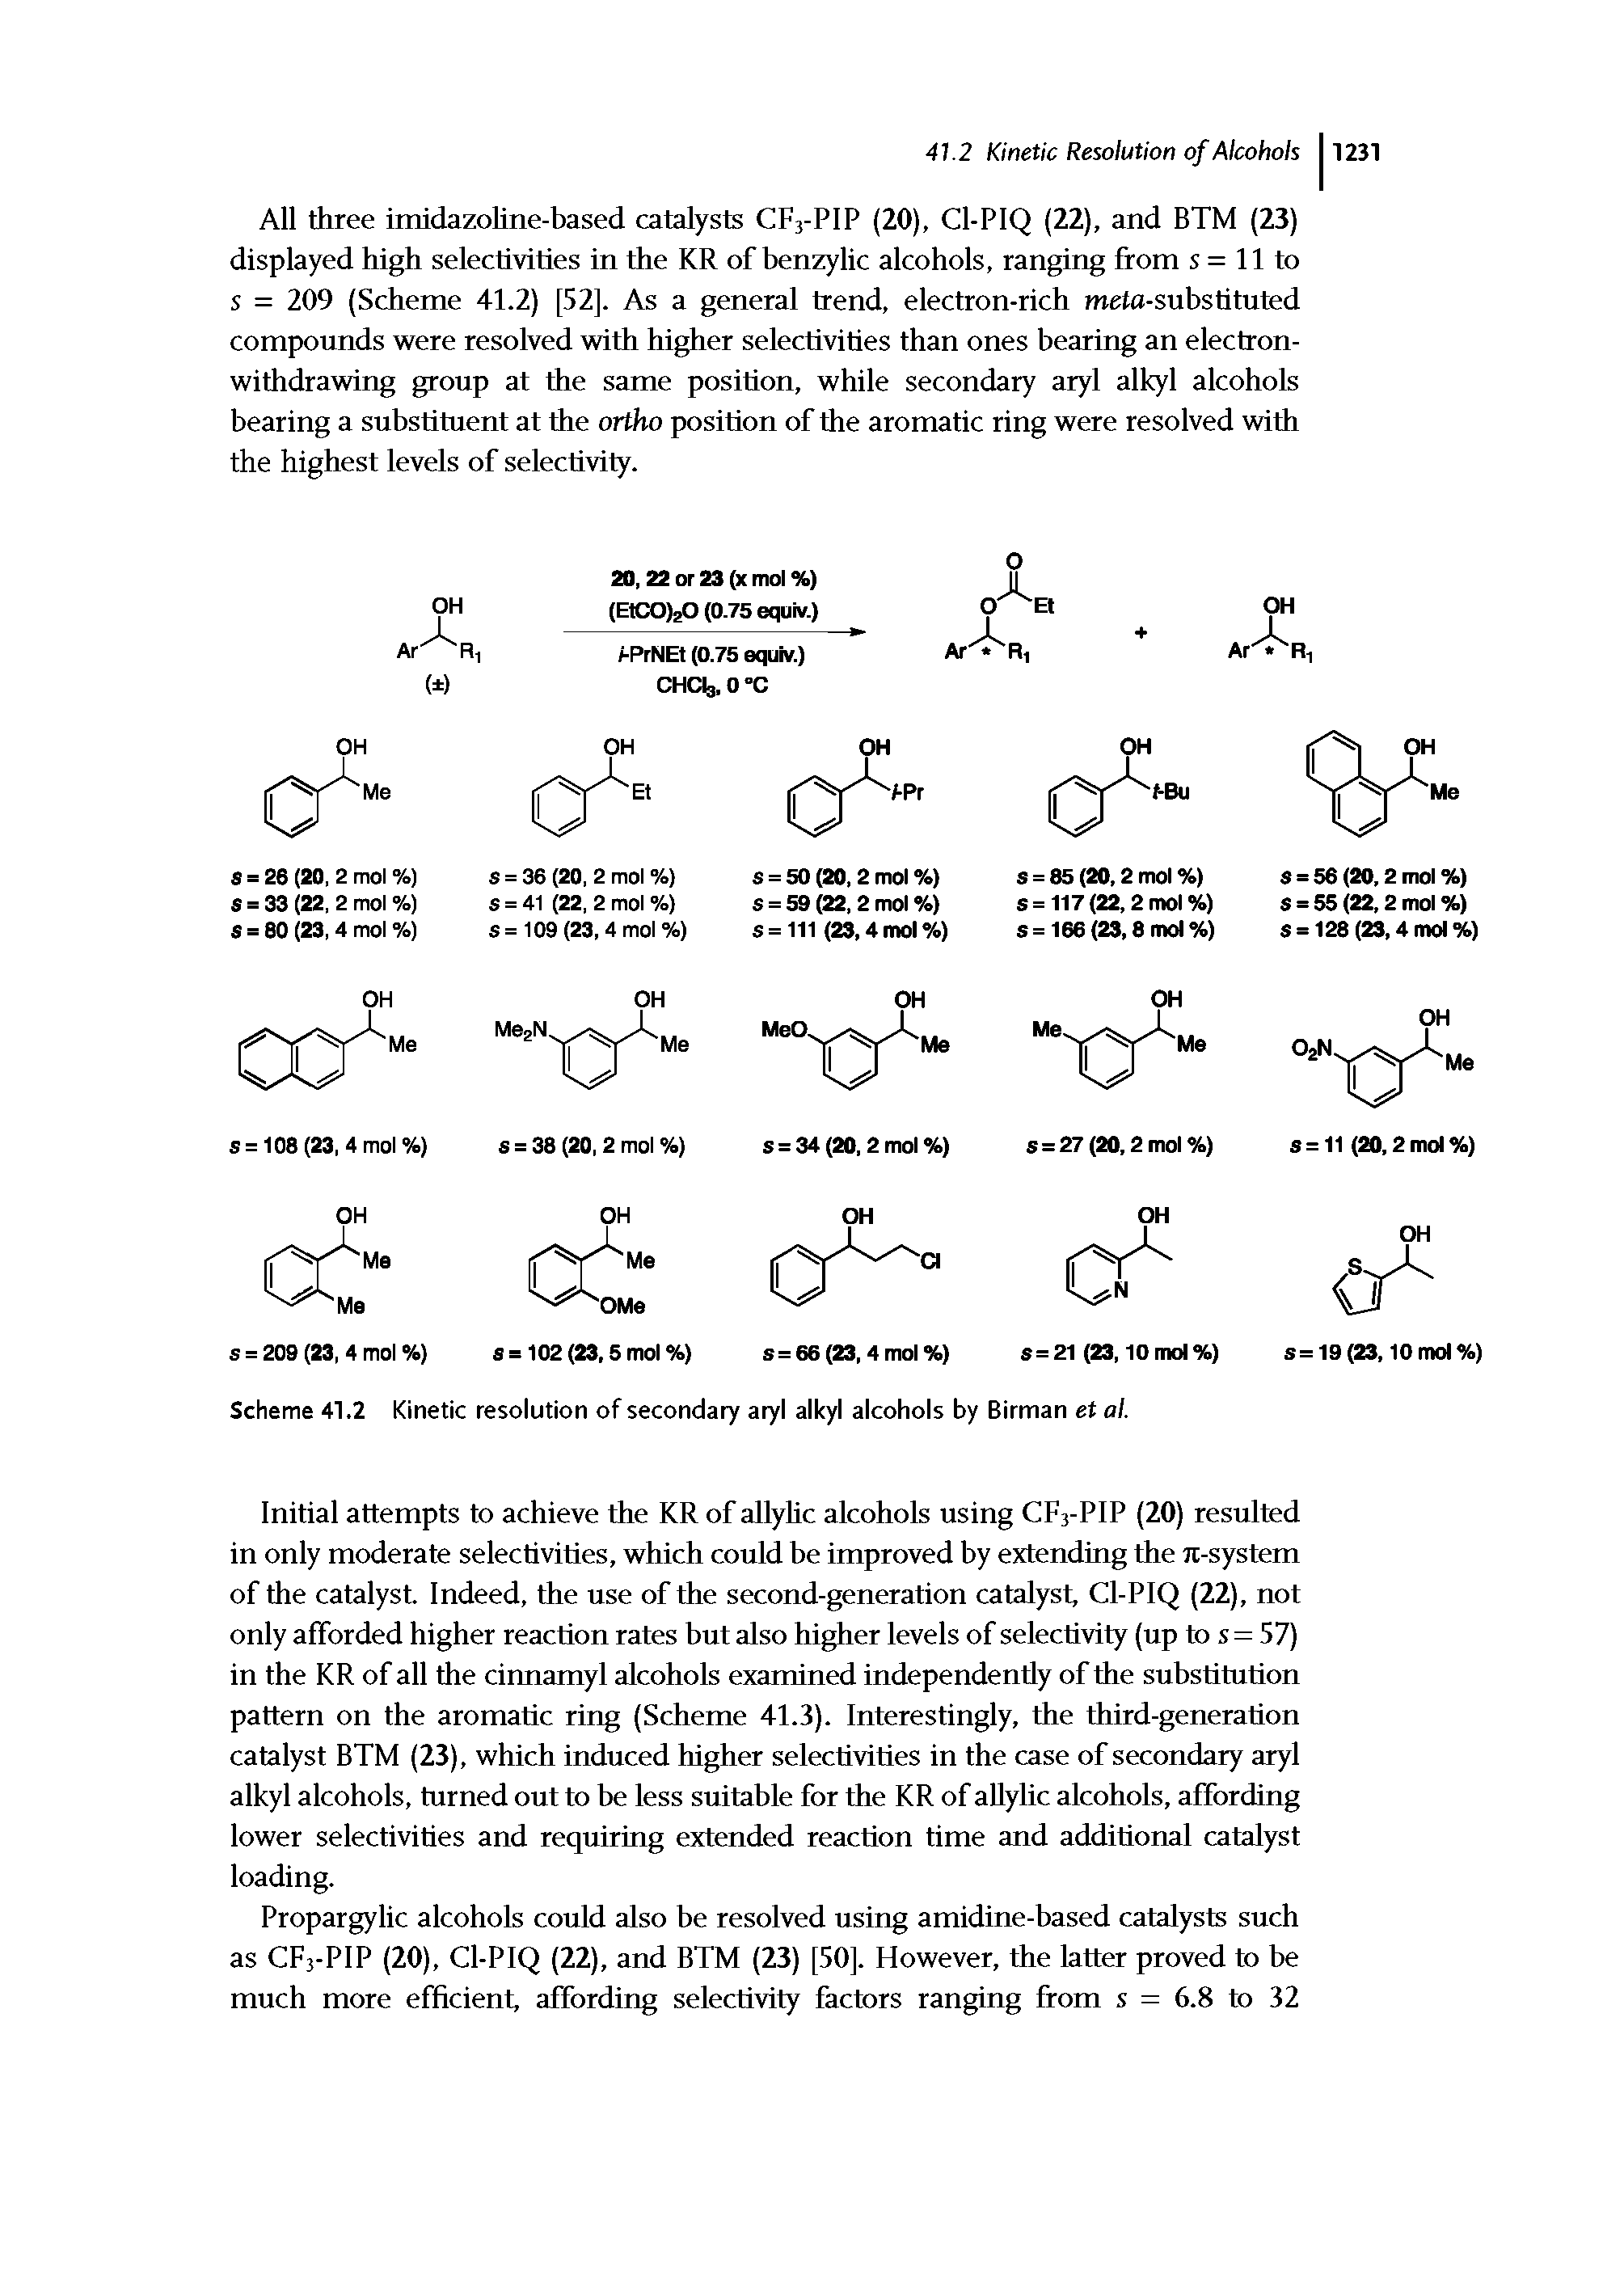 Scheme 41.2 Kinetic resolution of secondary aryl alkyl alcohols by Birman et al.